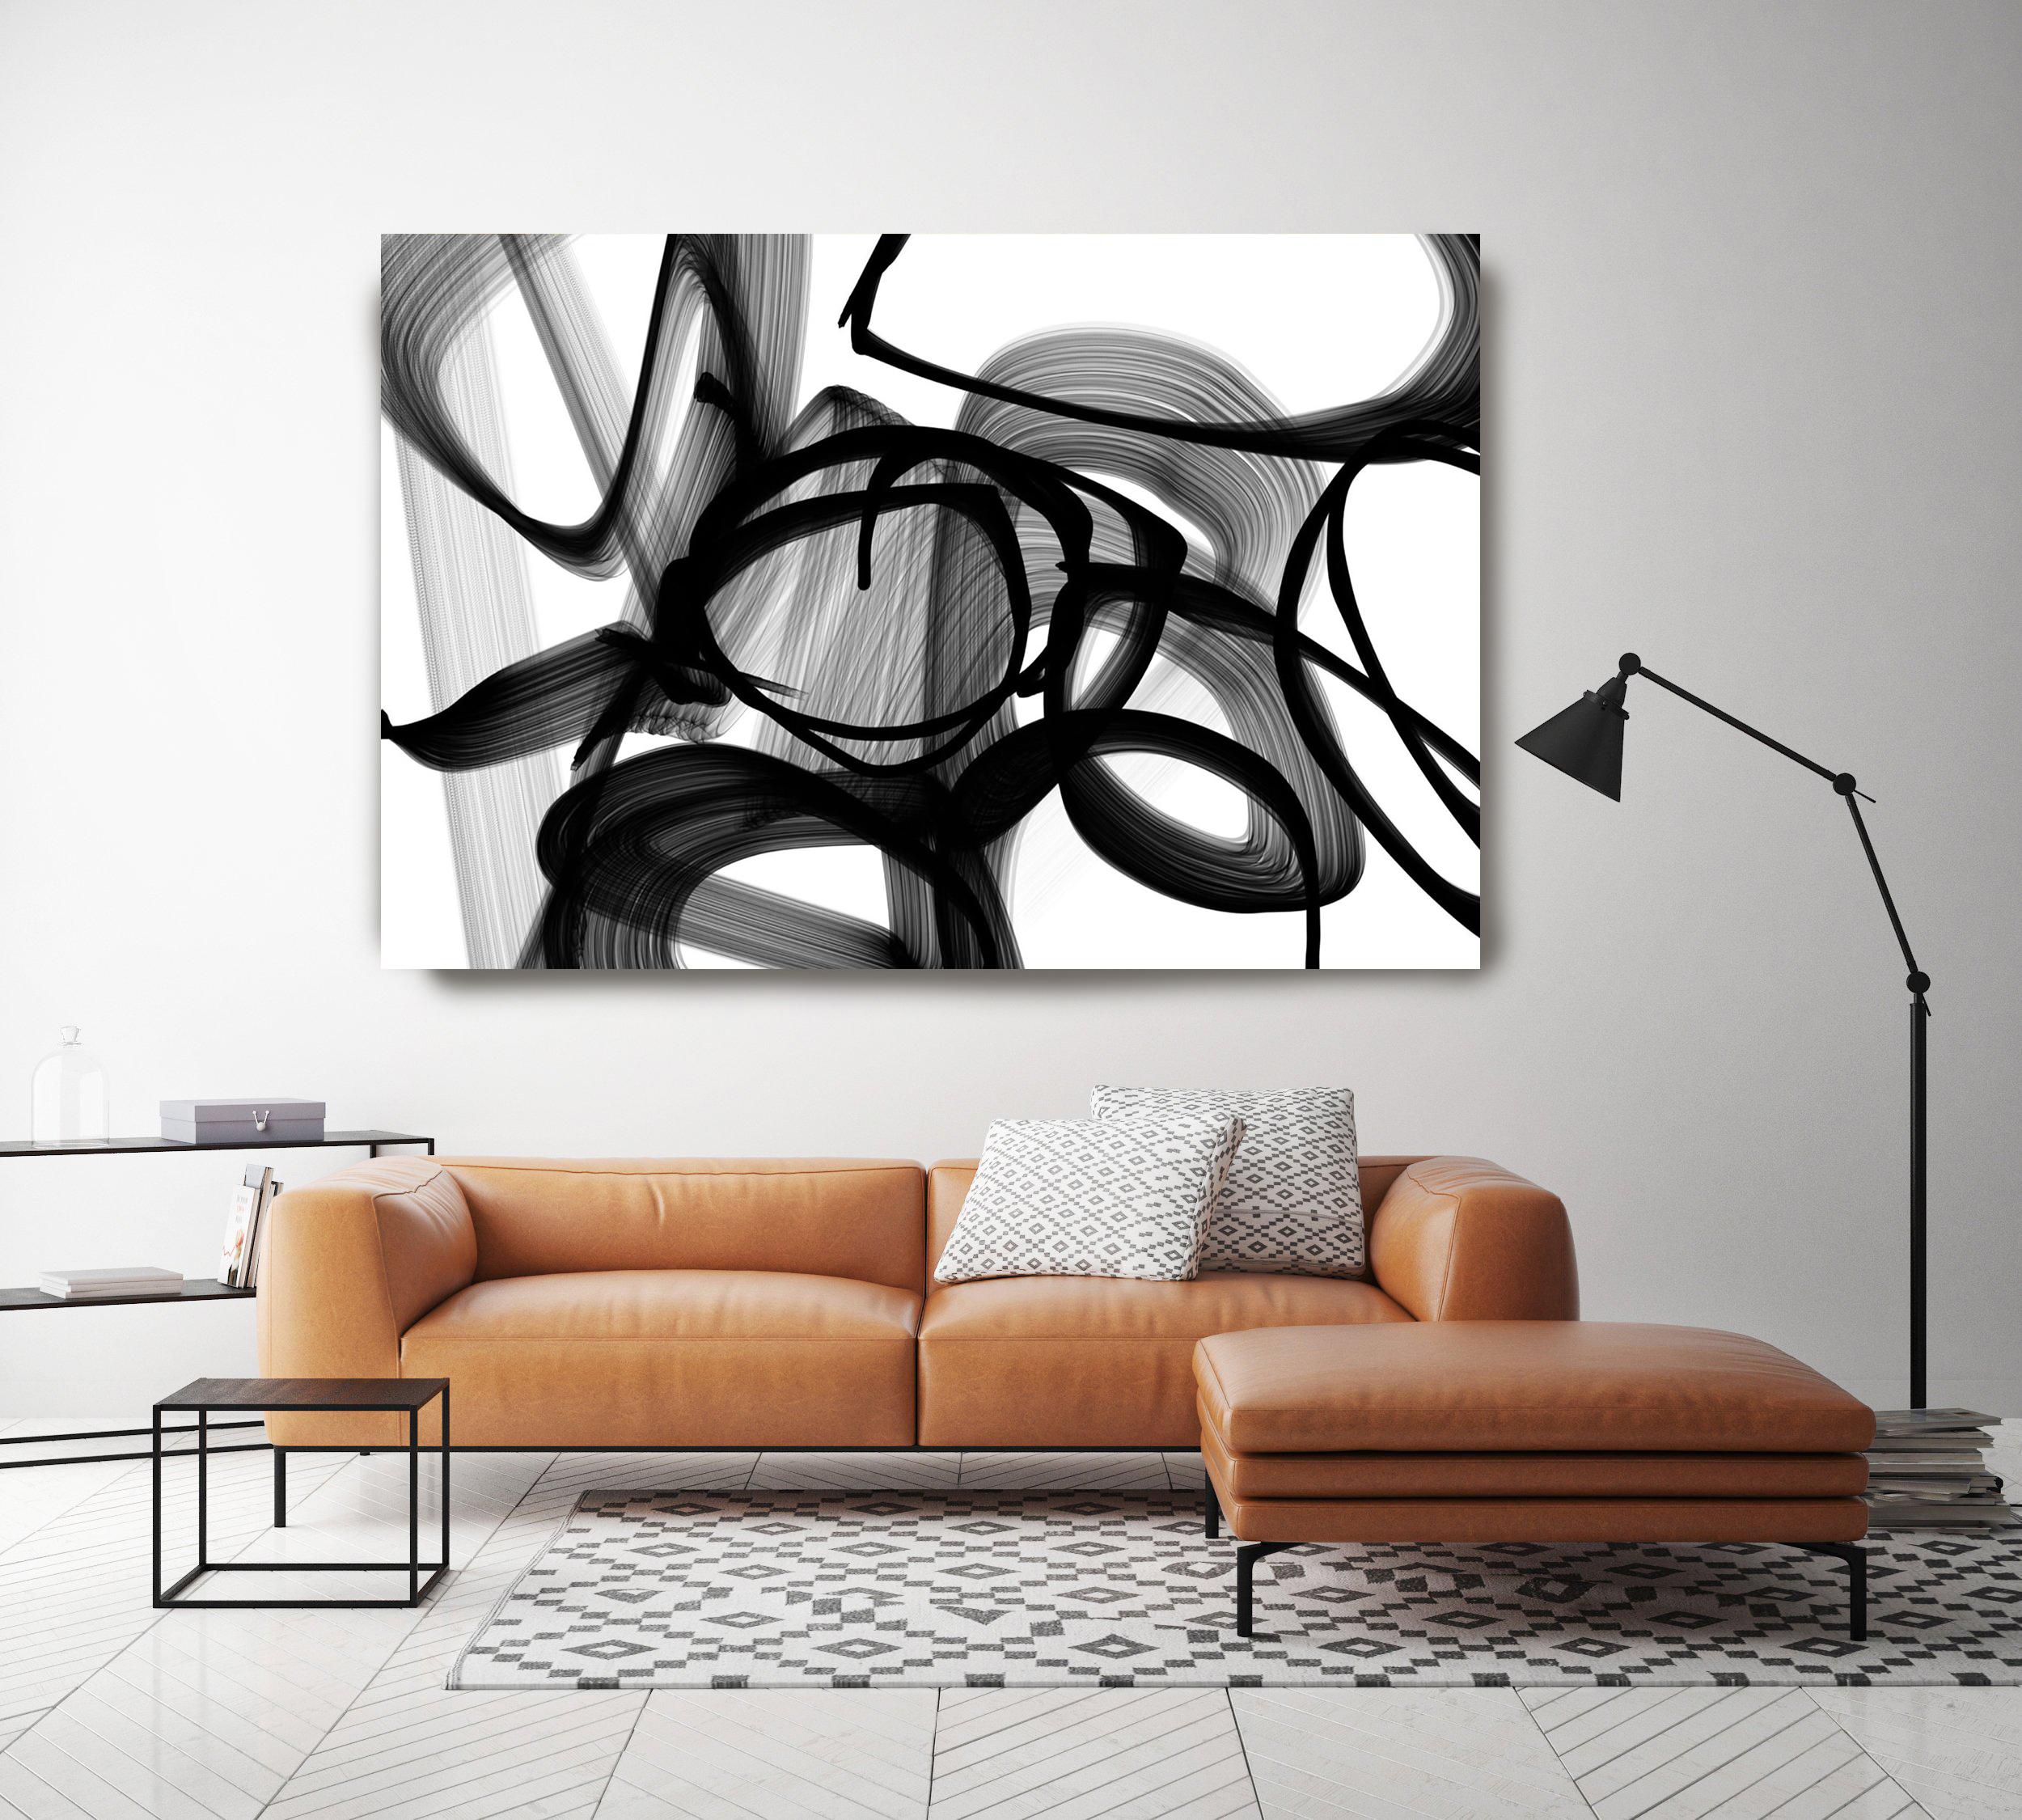 Brushstrokes in Black And White Mixed Media on Canvas 60 x 40"  - Mixed Media Art by Irena Orlov